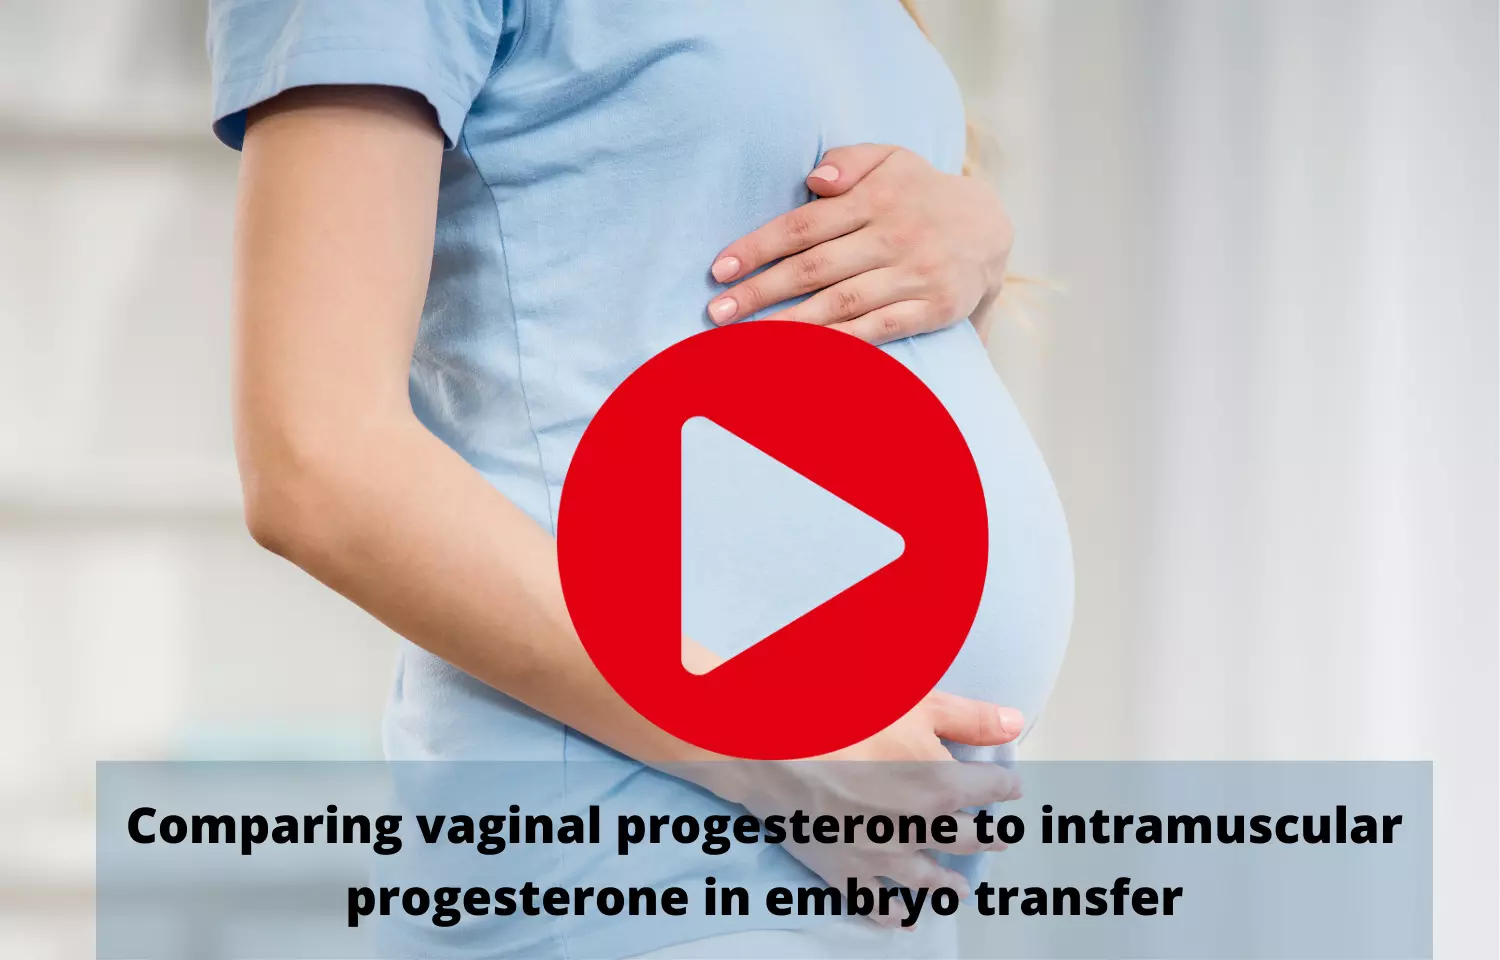 vaginal progesterone effective in intramuscular progesterone for embryo transfer